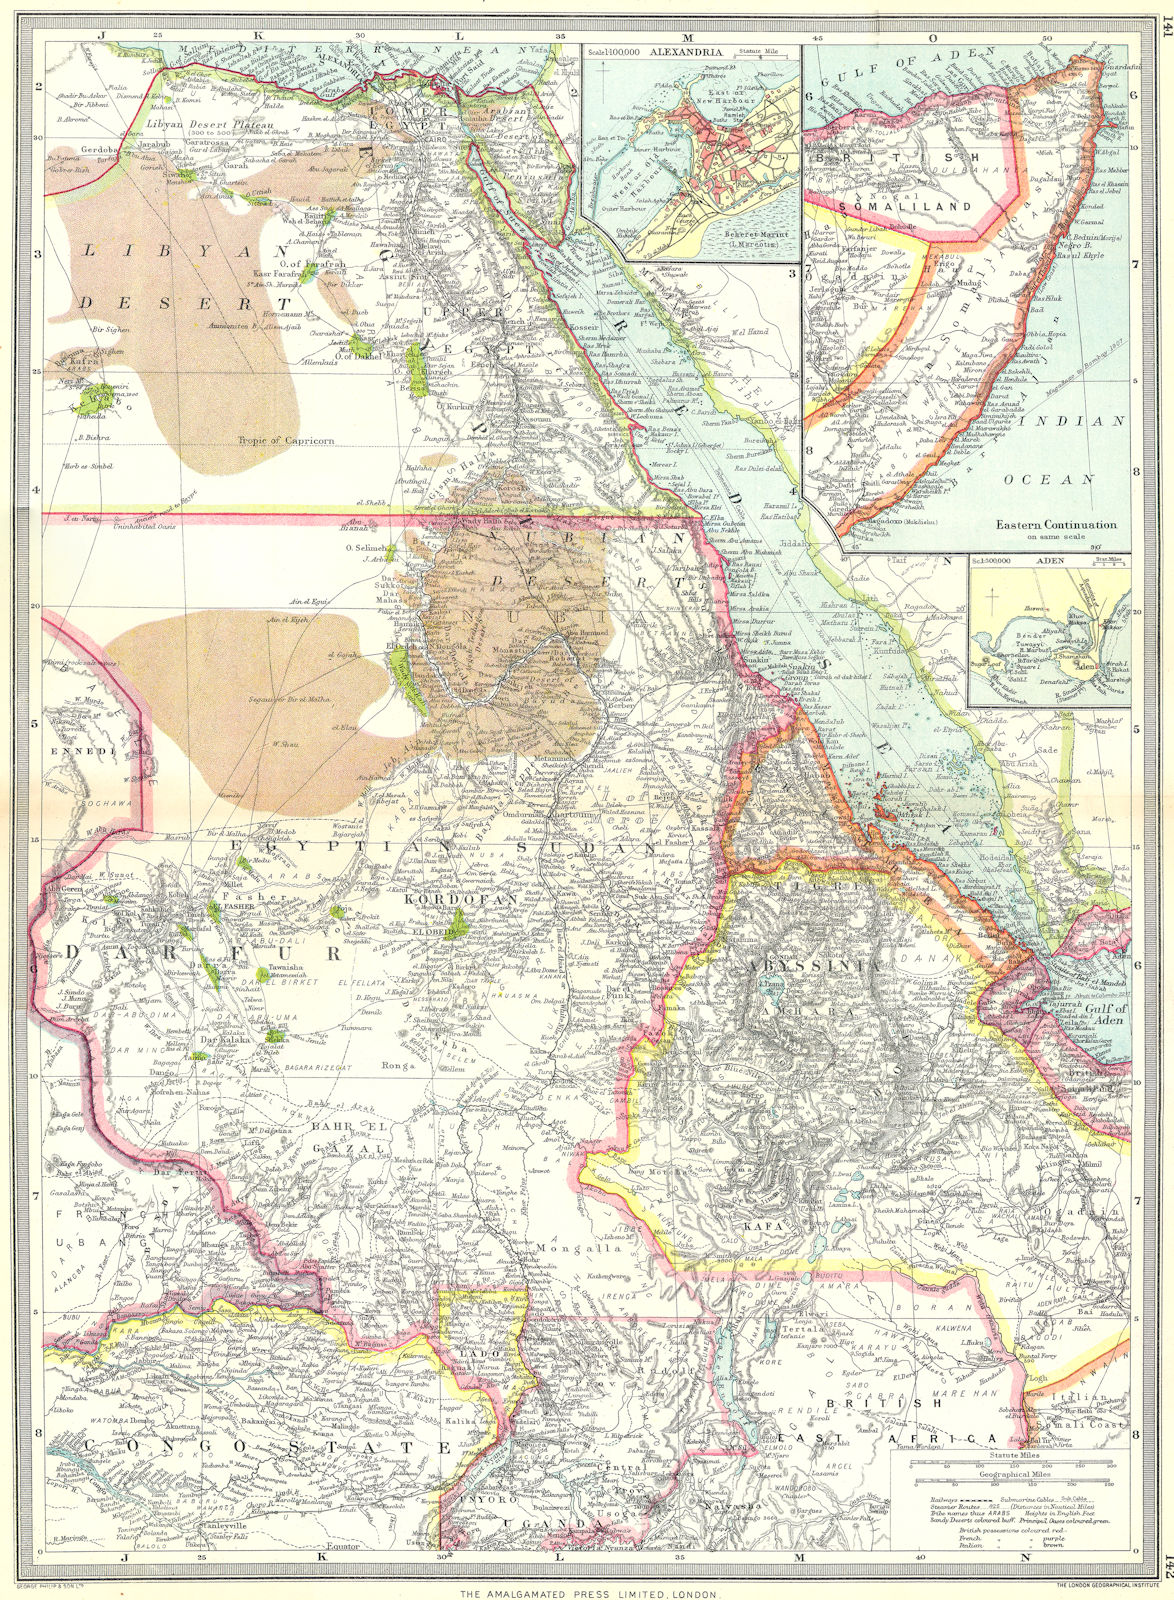 EGYPT SUDAN ABYSSINIA. Alexandria; Eastern Continuation; Aden 1907 old map